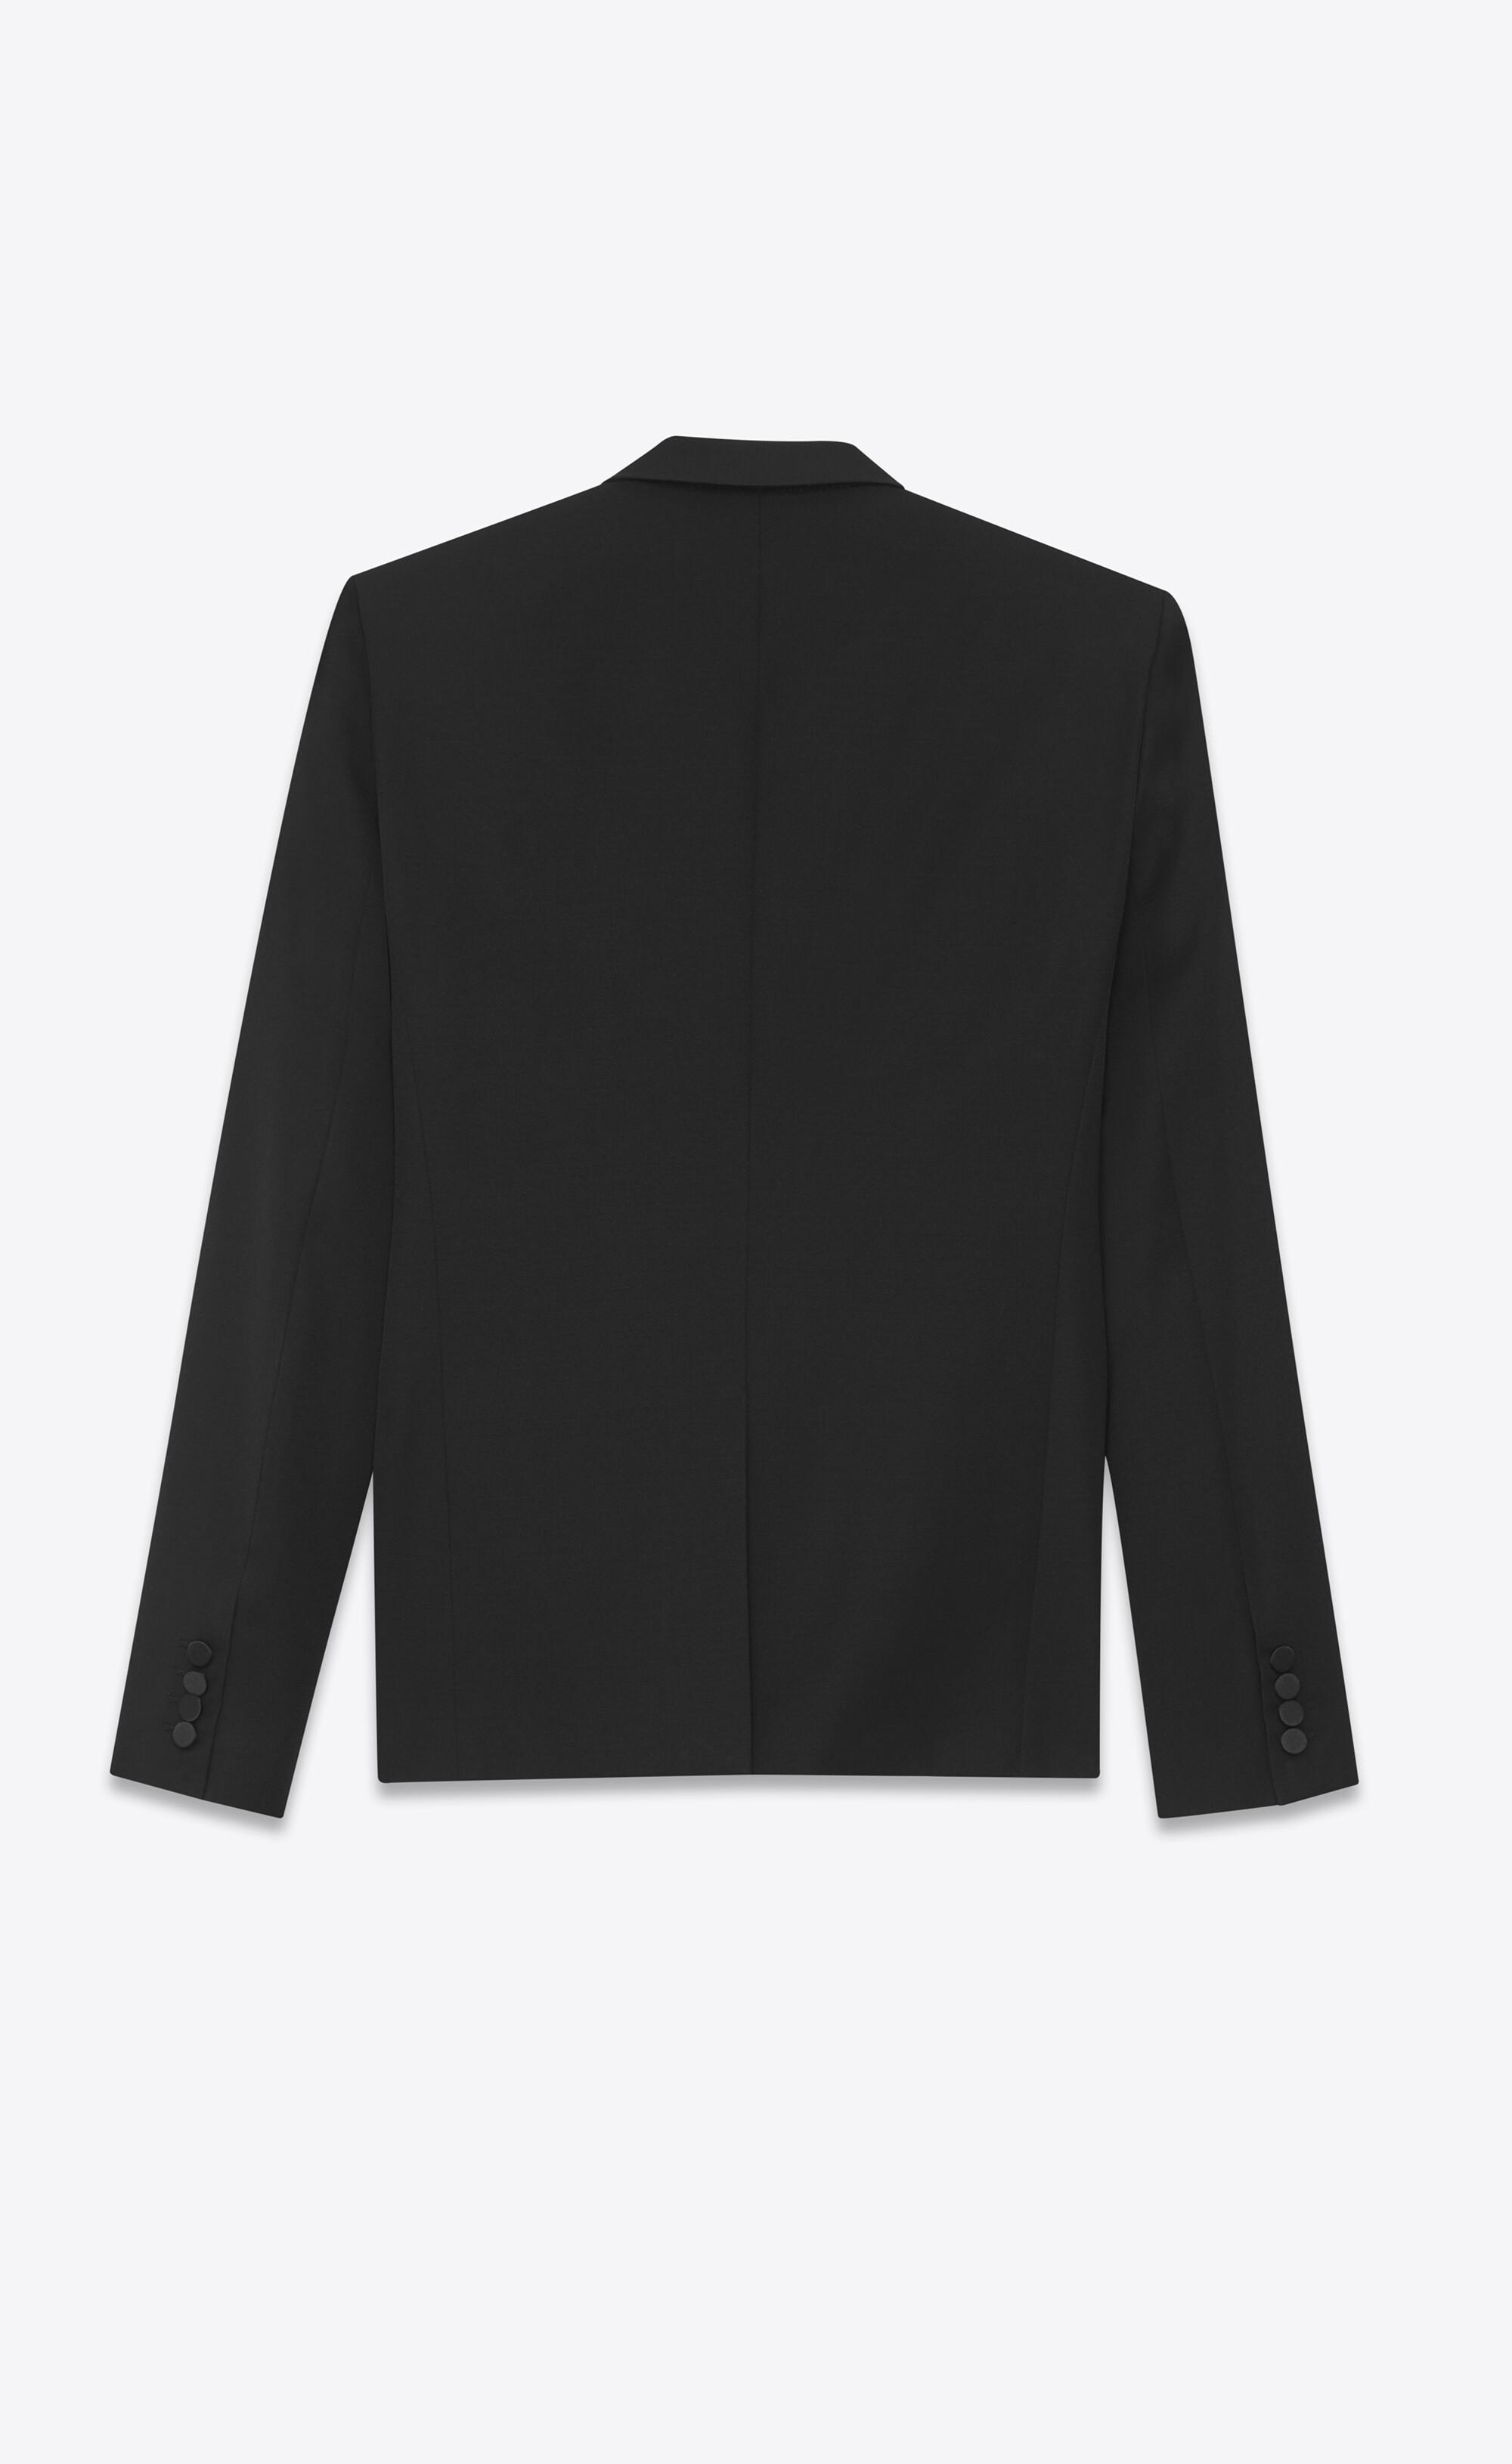 Saint Laurent Wool Giacca Smoking Jacket in Black - Save 3% | Lyst